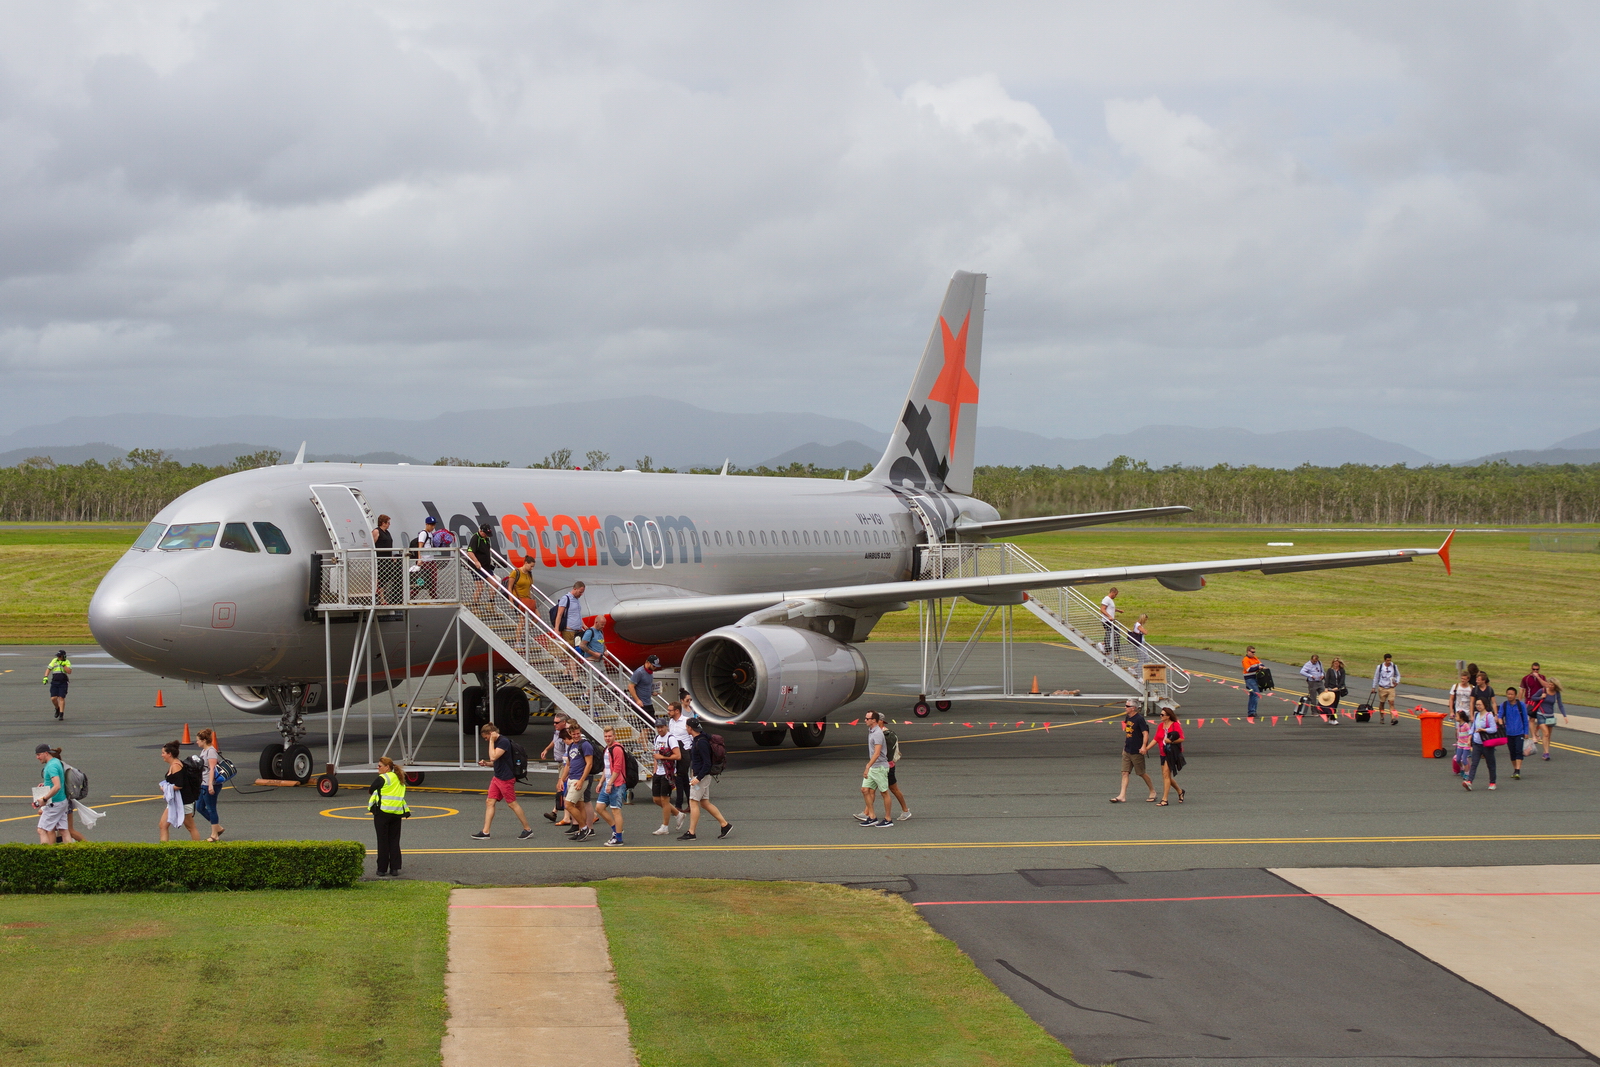 Central Queensland Plane Spotting Jetstar Airways Boost Services to Proserpine (Whitsunday